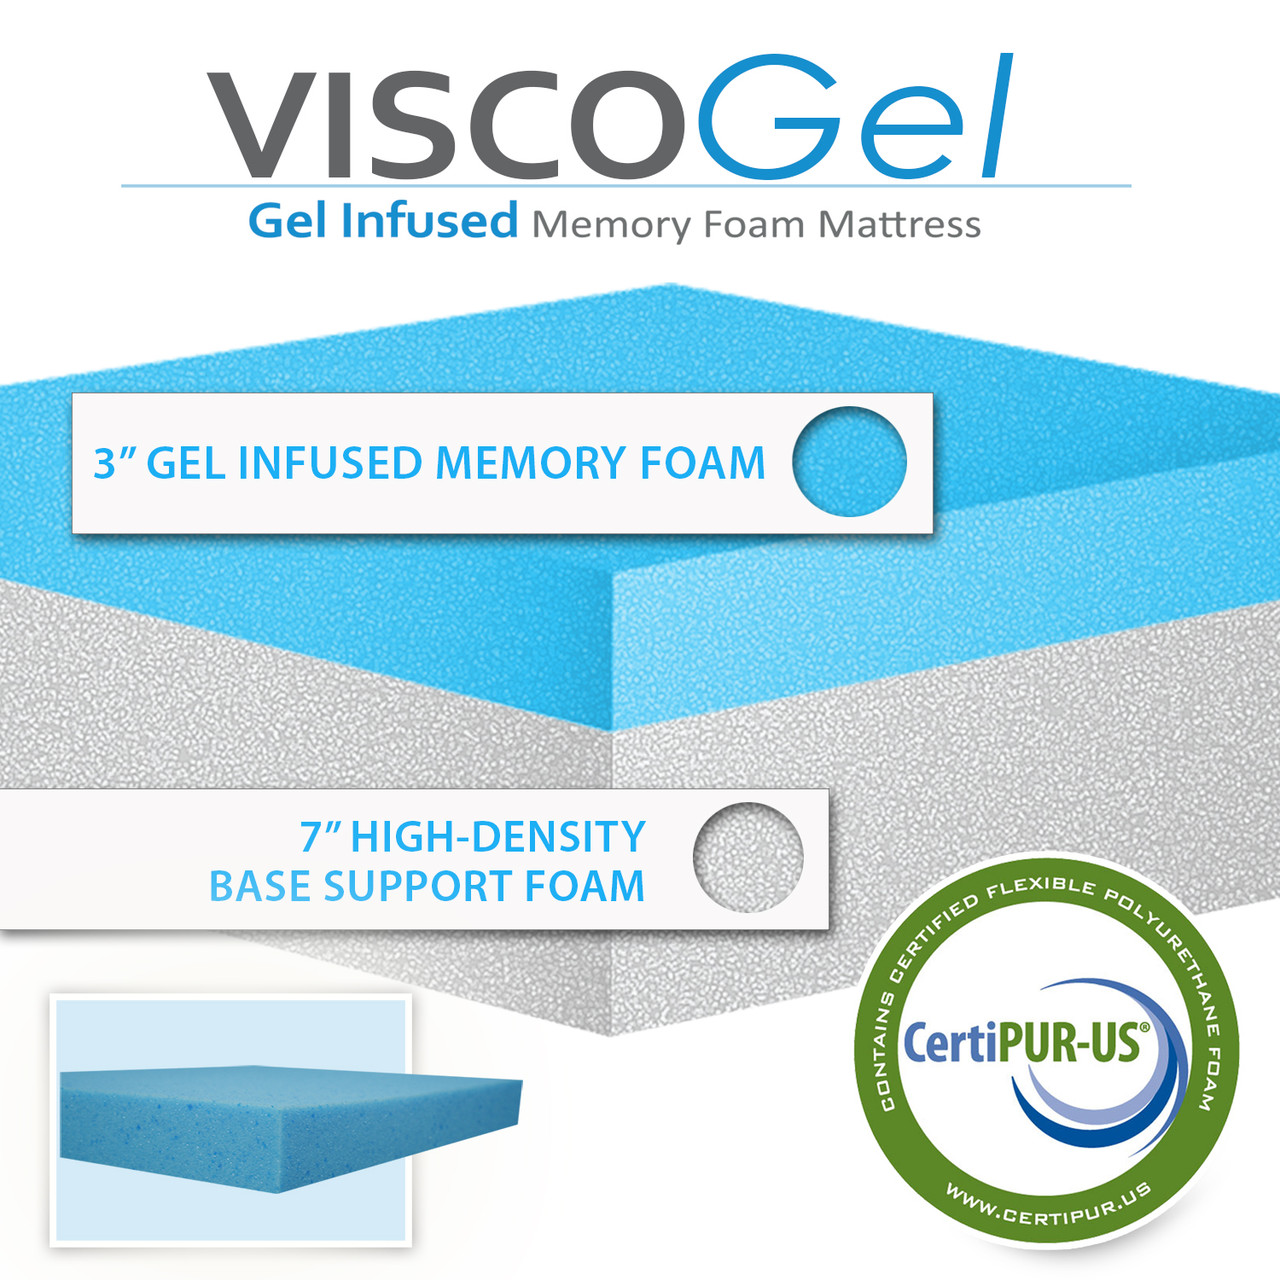 The 10 ViscoGel Cool Gel Infused Memory Foam Mattress, CertiPUR